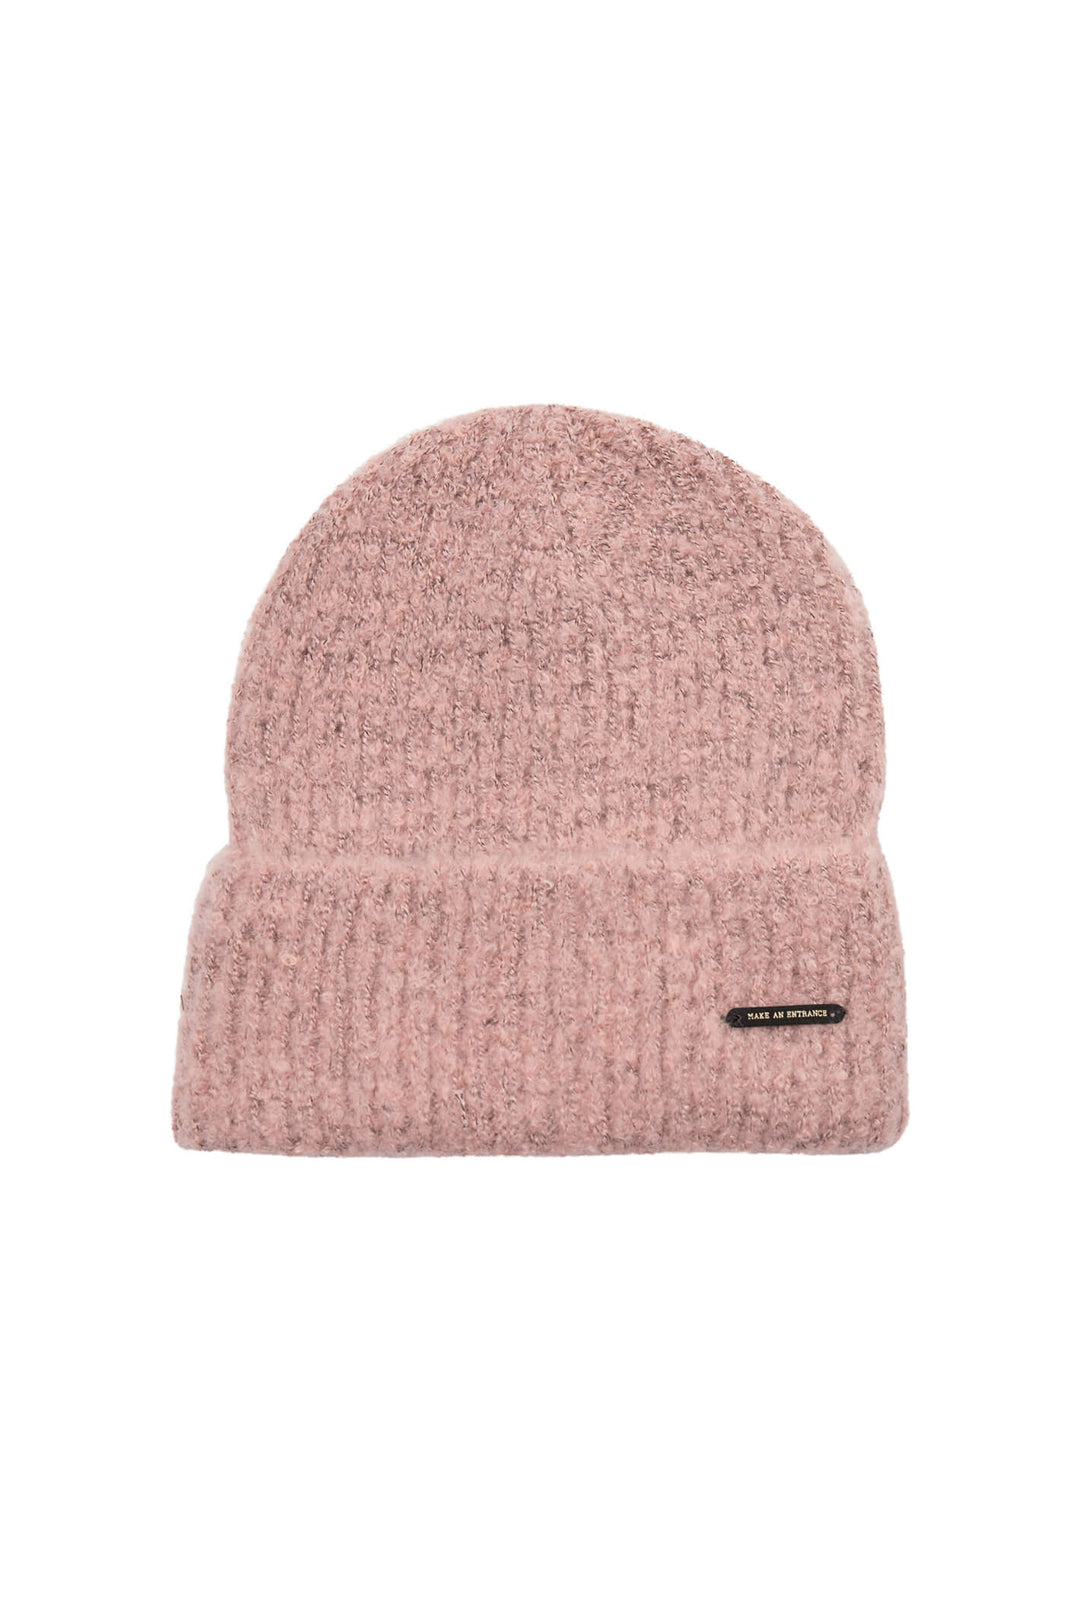 Numph 701072 Nubobbly 2537 Chalk Pink Hat